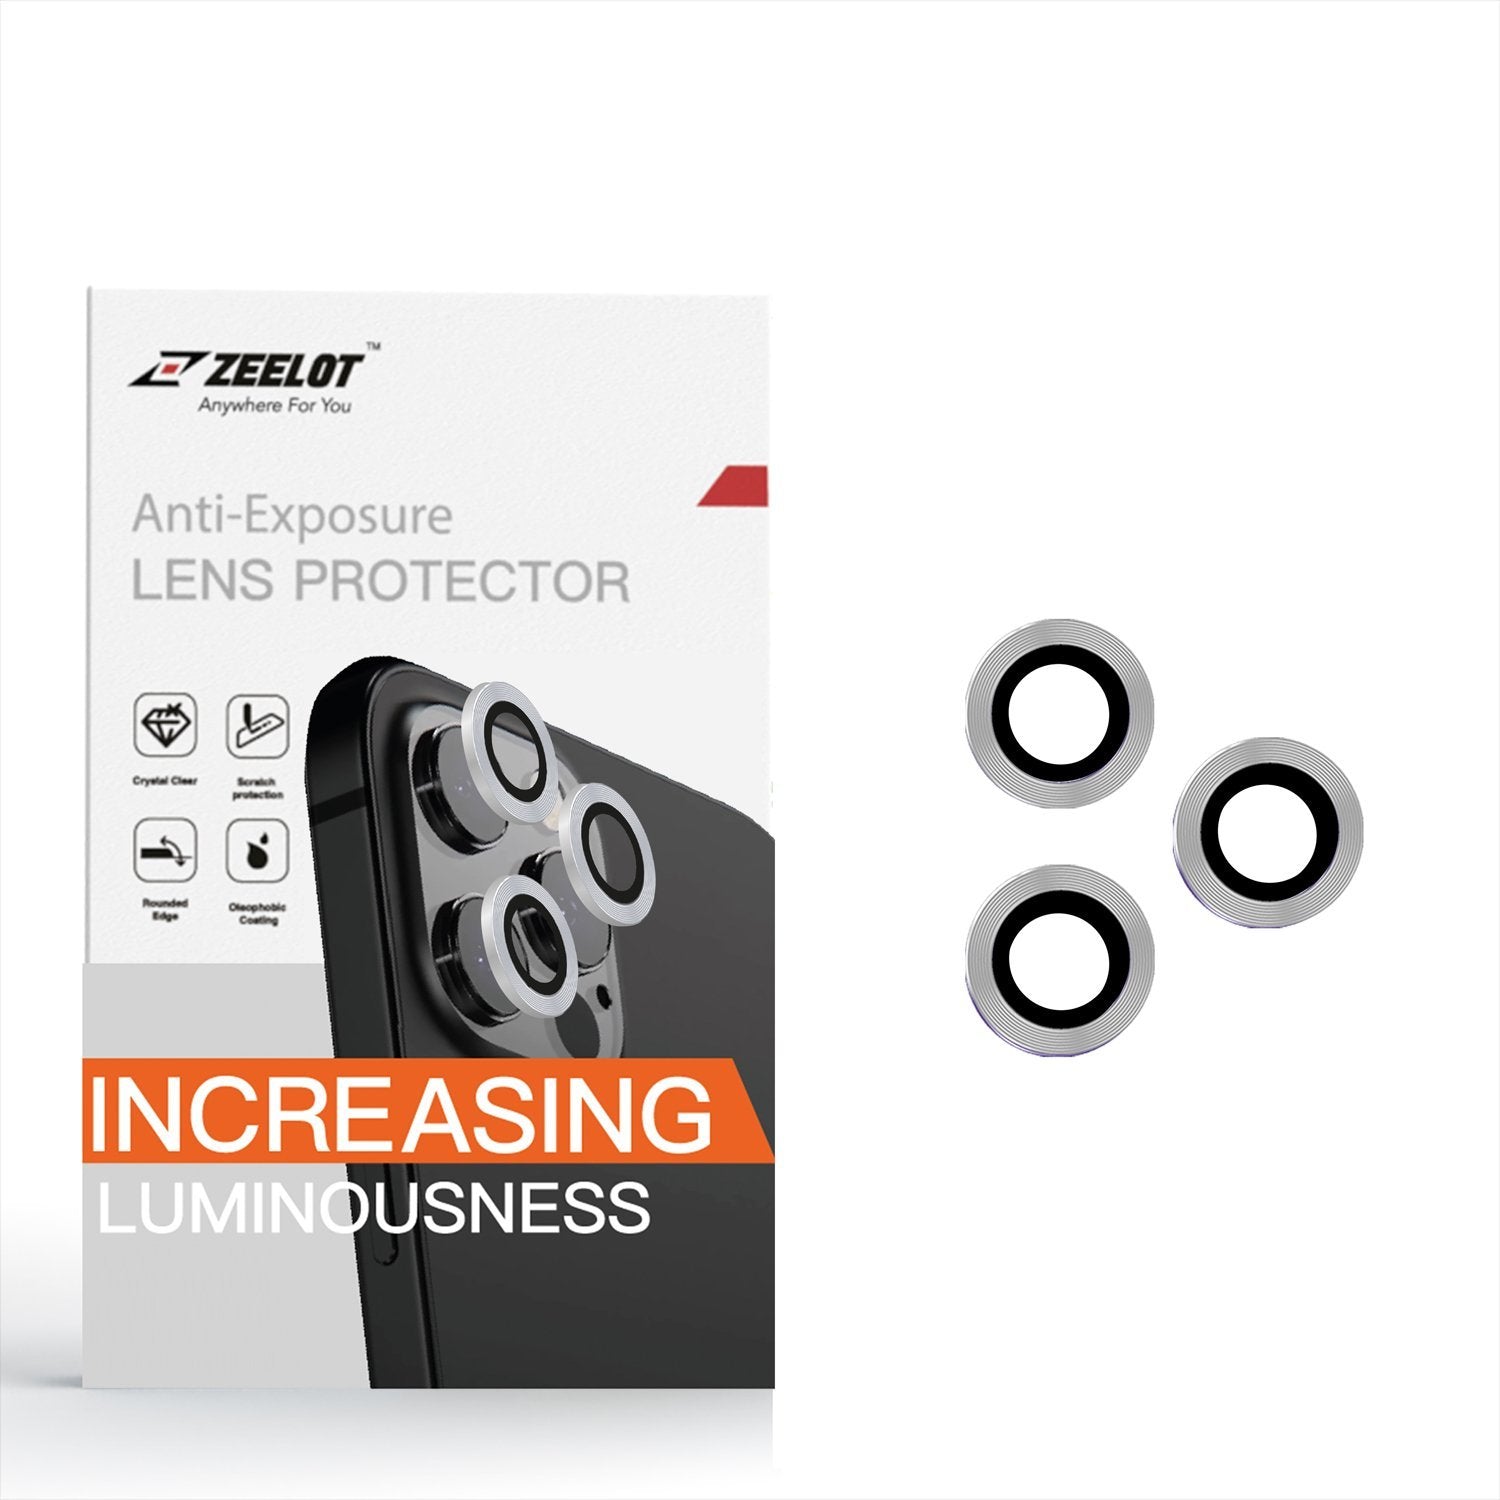 ZEELOT Titanium Steel with Lens Protector for iPhone 12 Pro 6.1" (Three Cameras), Silver Default ZEELOT 